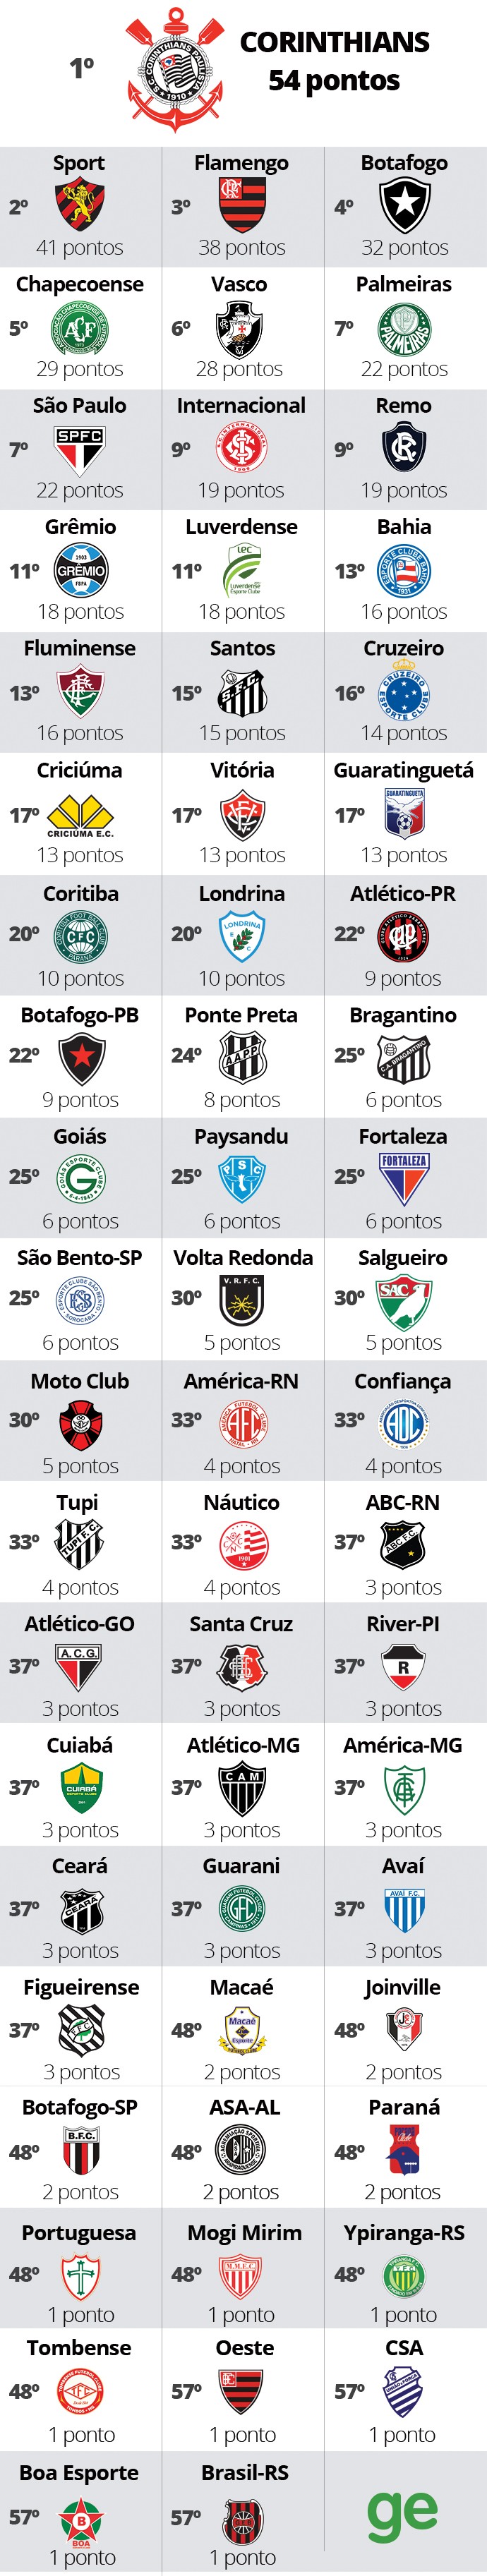 ranking clubes